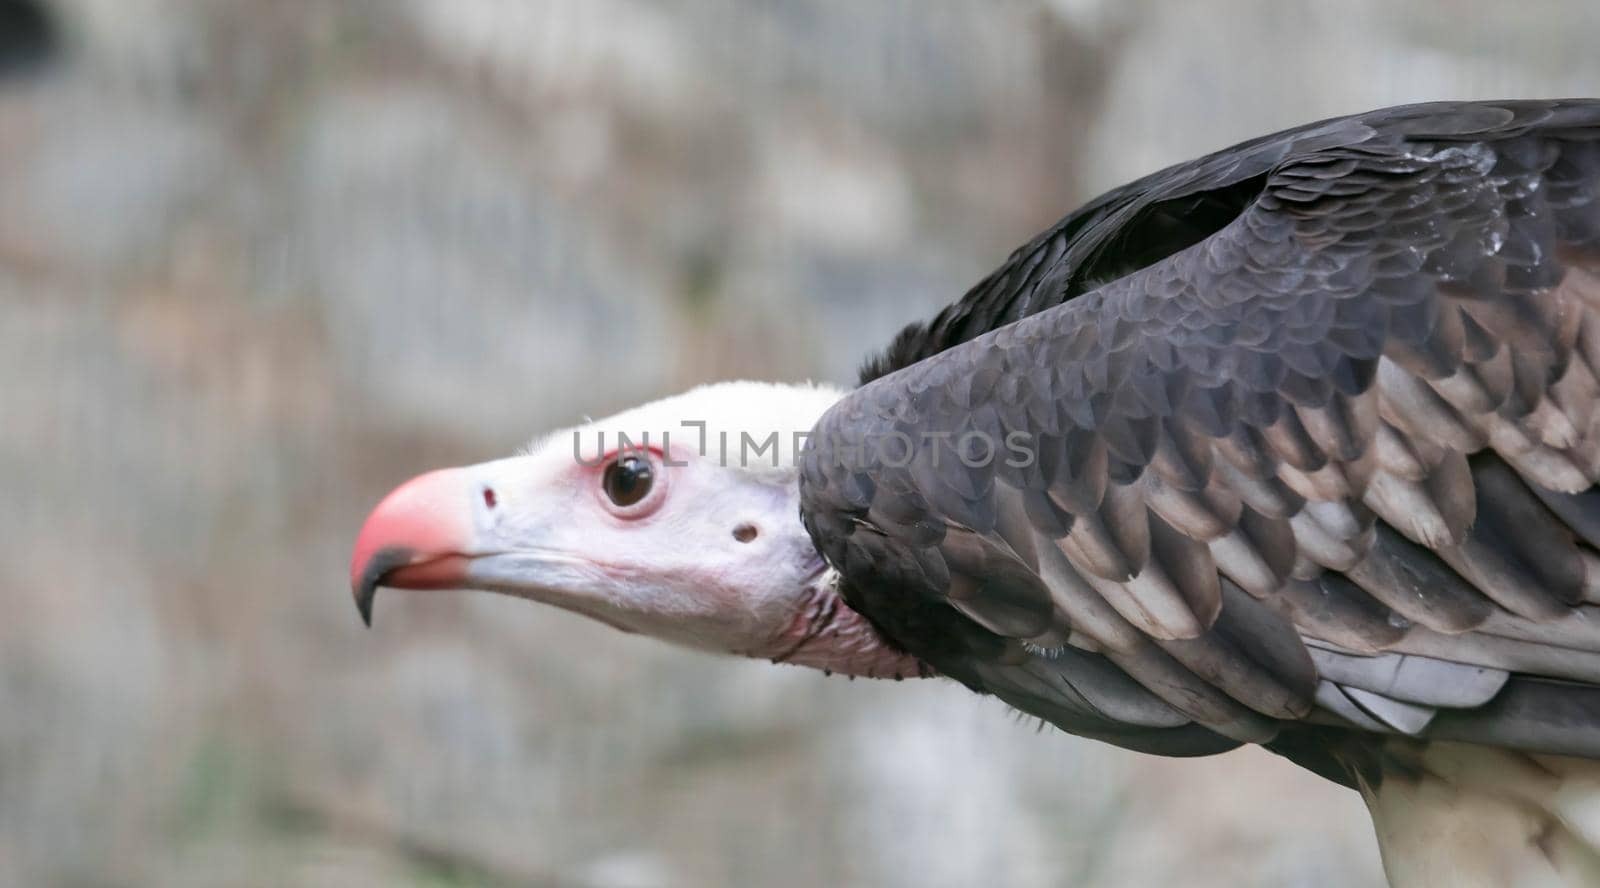 A Close up of a White-headed vulture (Trigonoceps occipitalis)